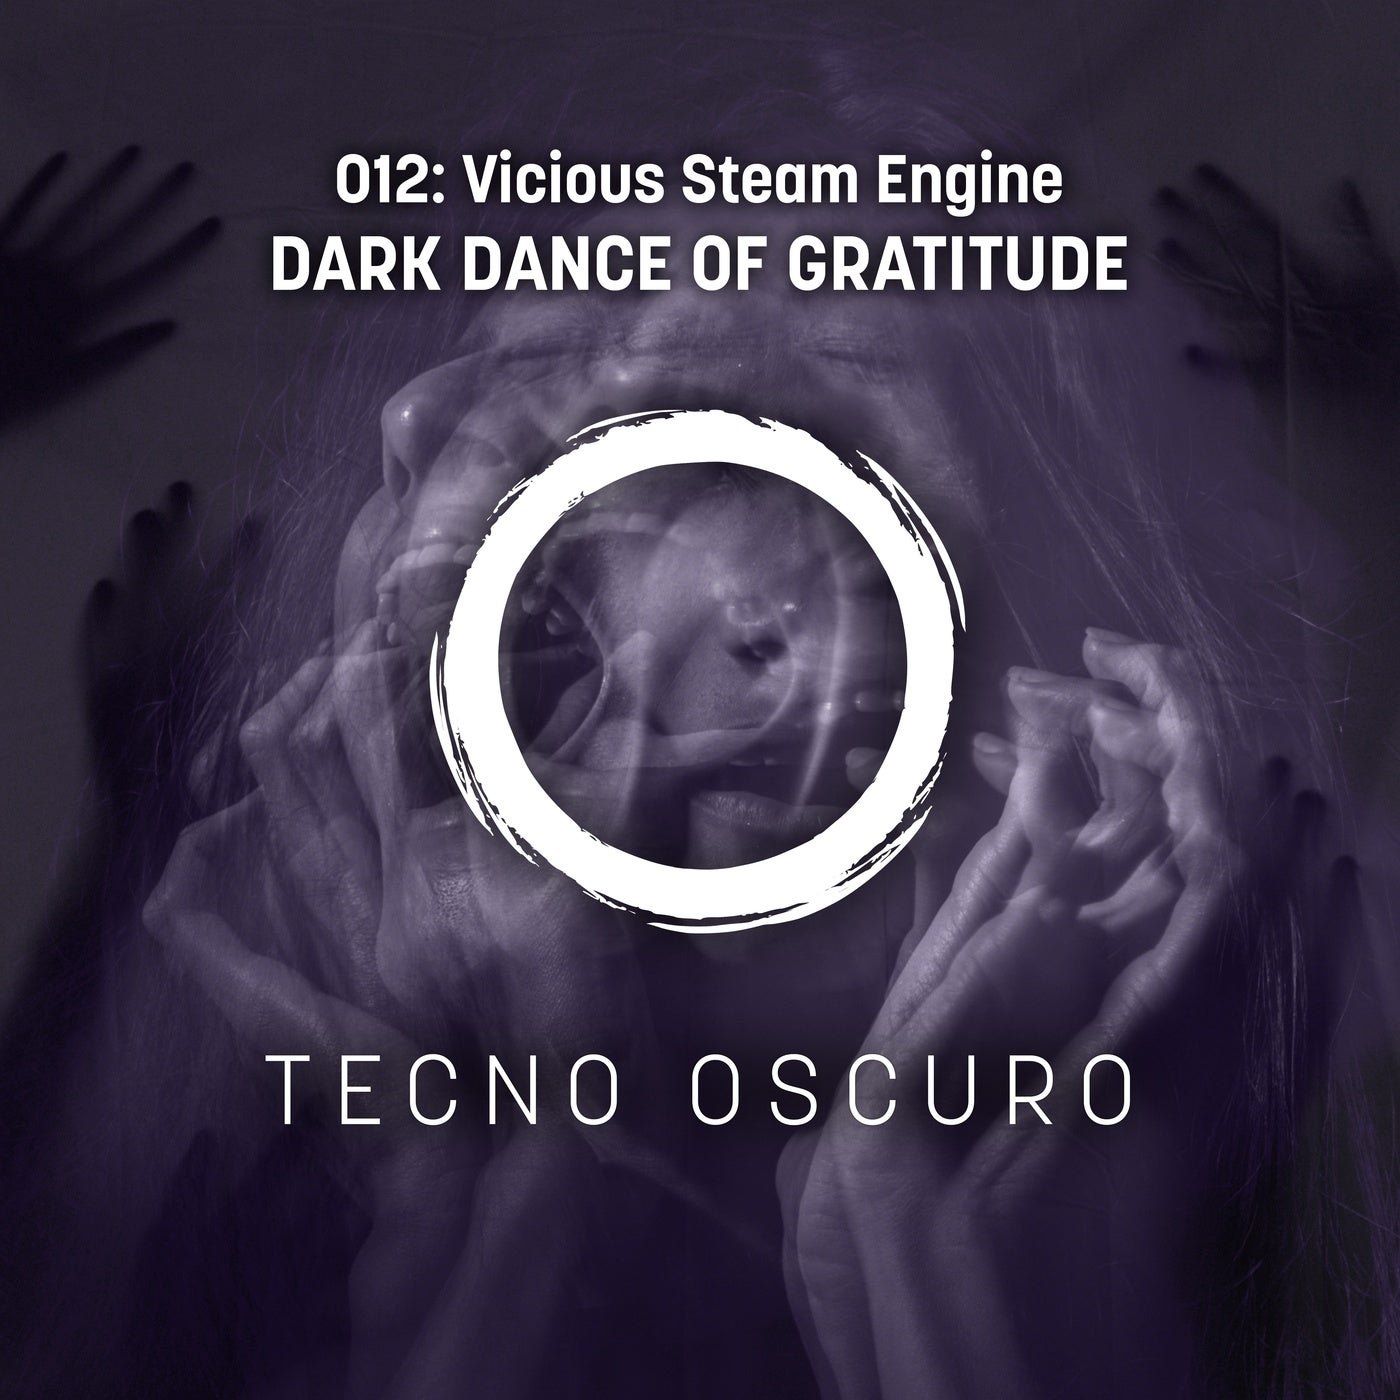 Dark Dance of Gratitude